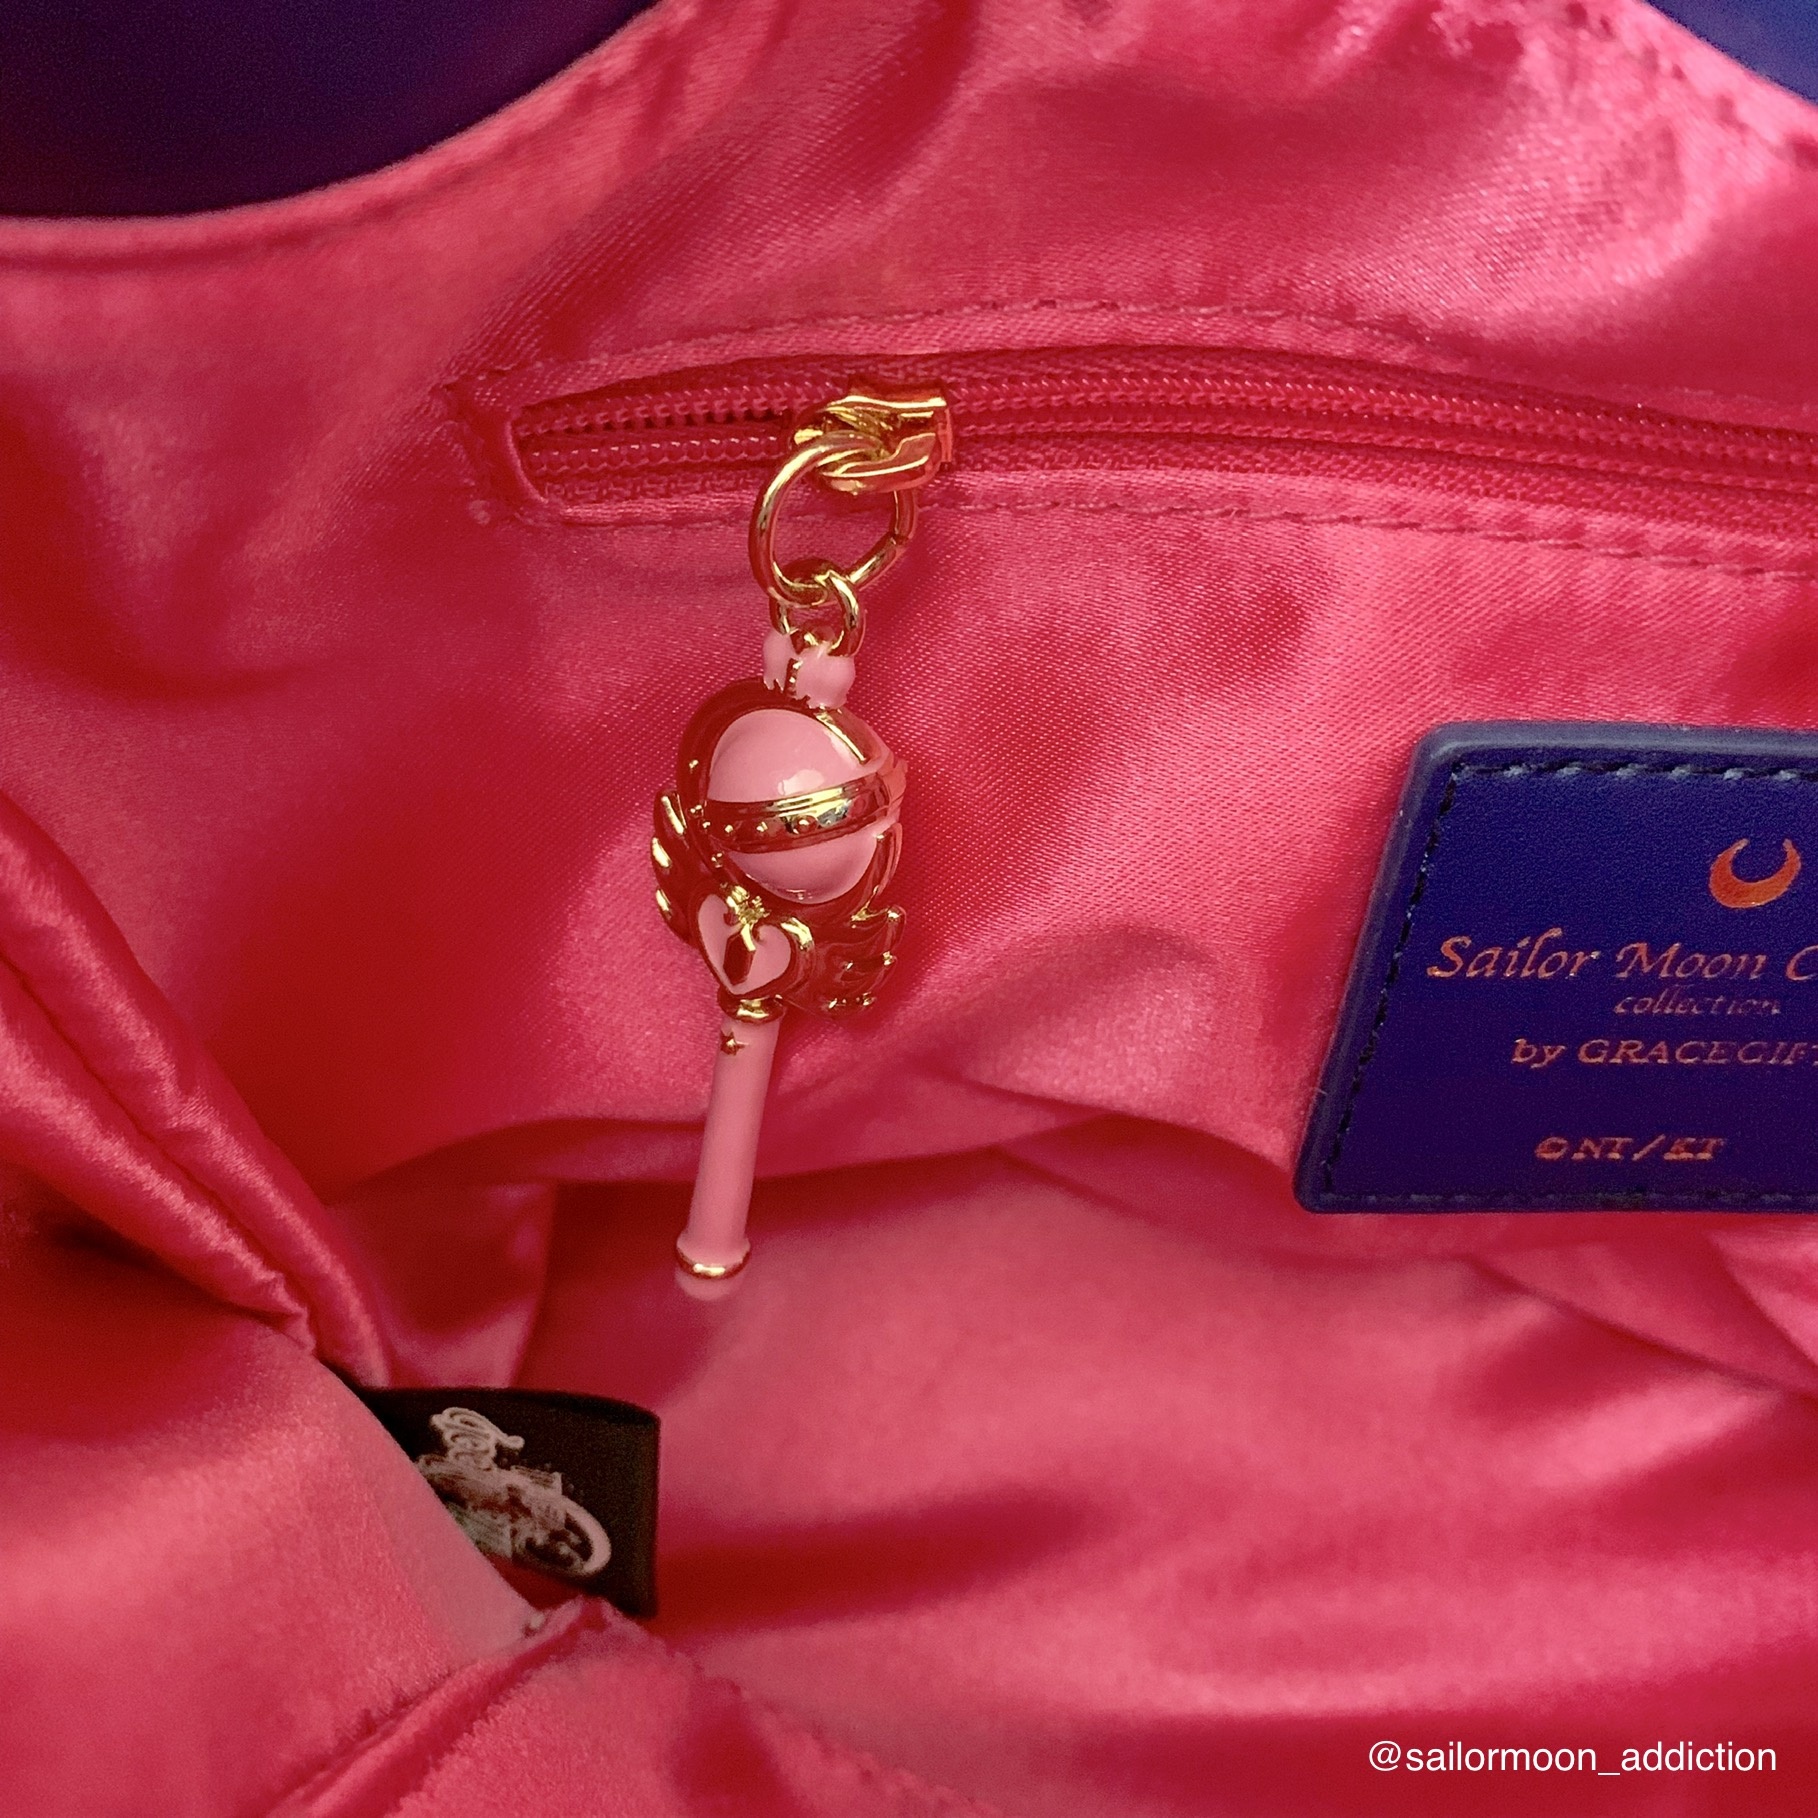 Review - Sailor Moon x Grace Gift Bucket Purse Interior